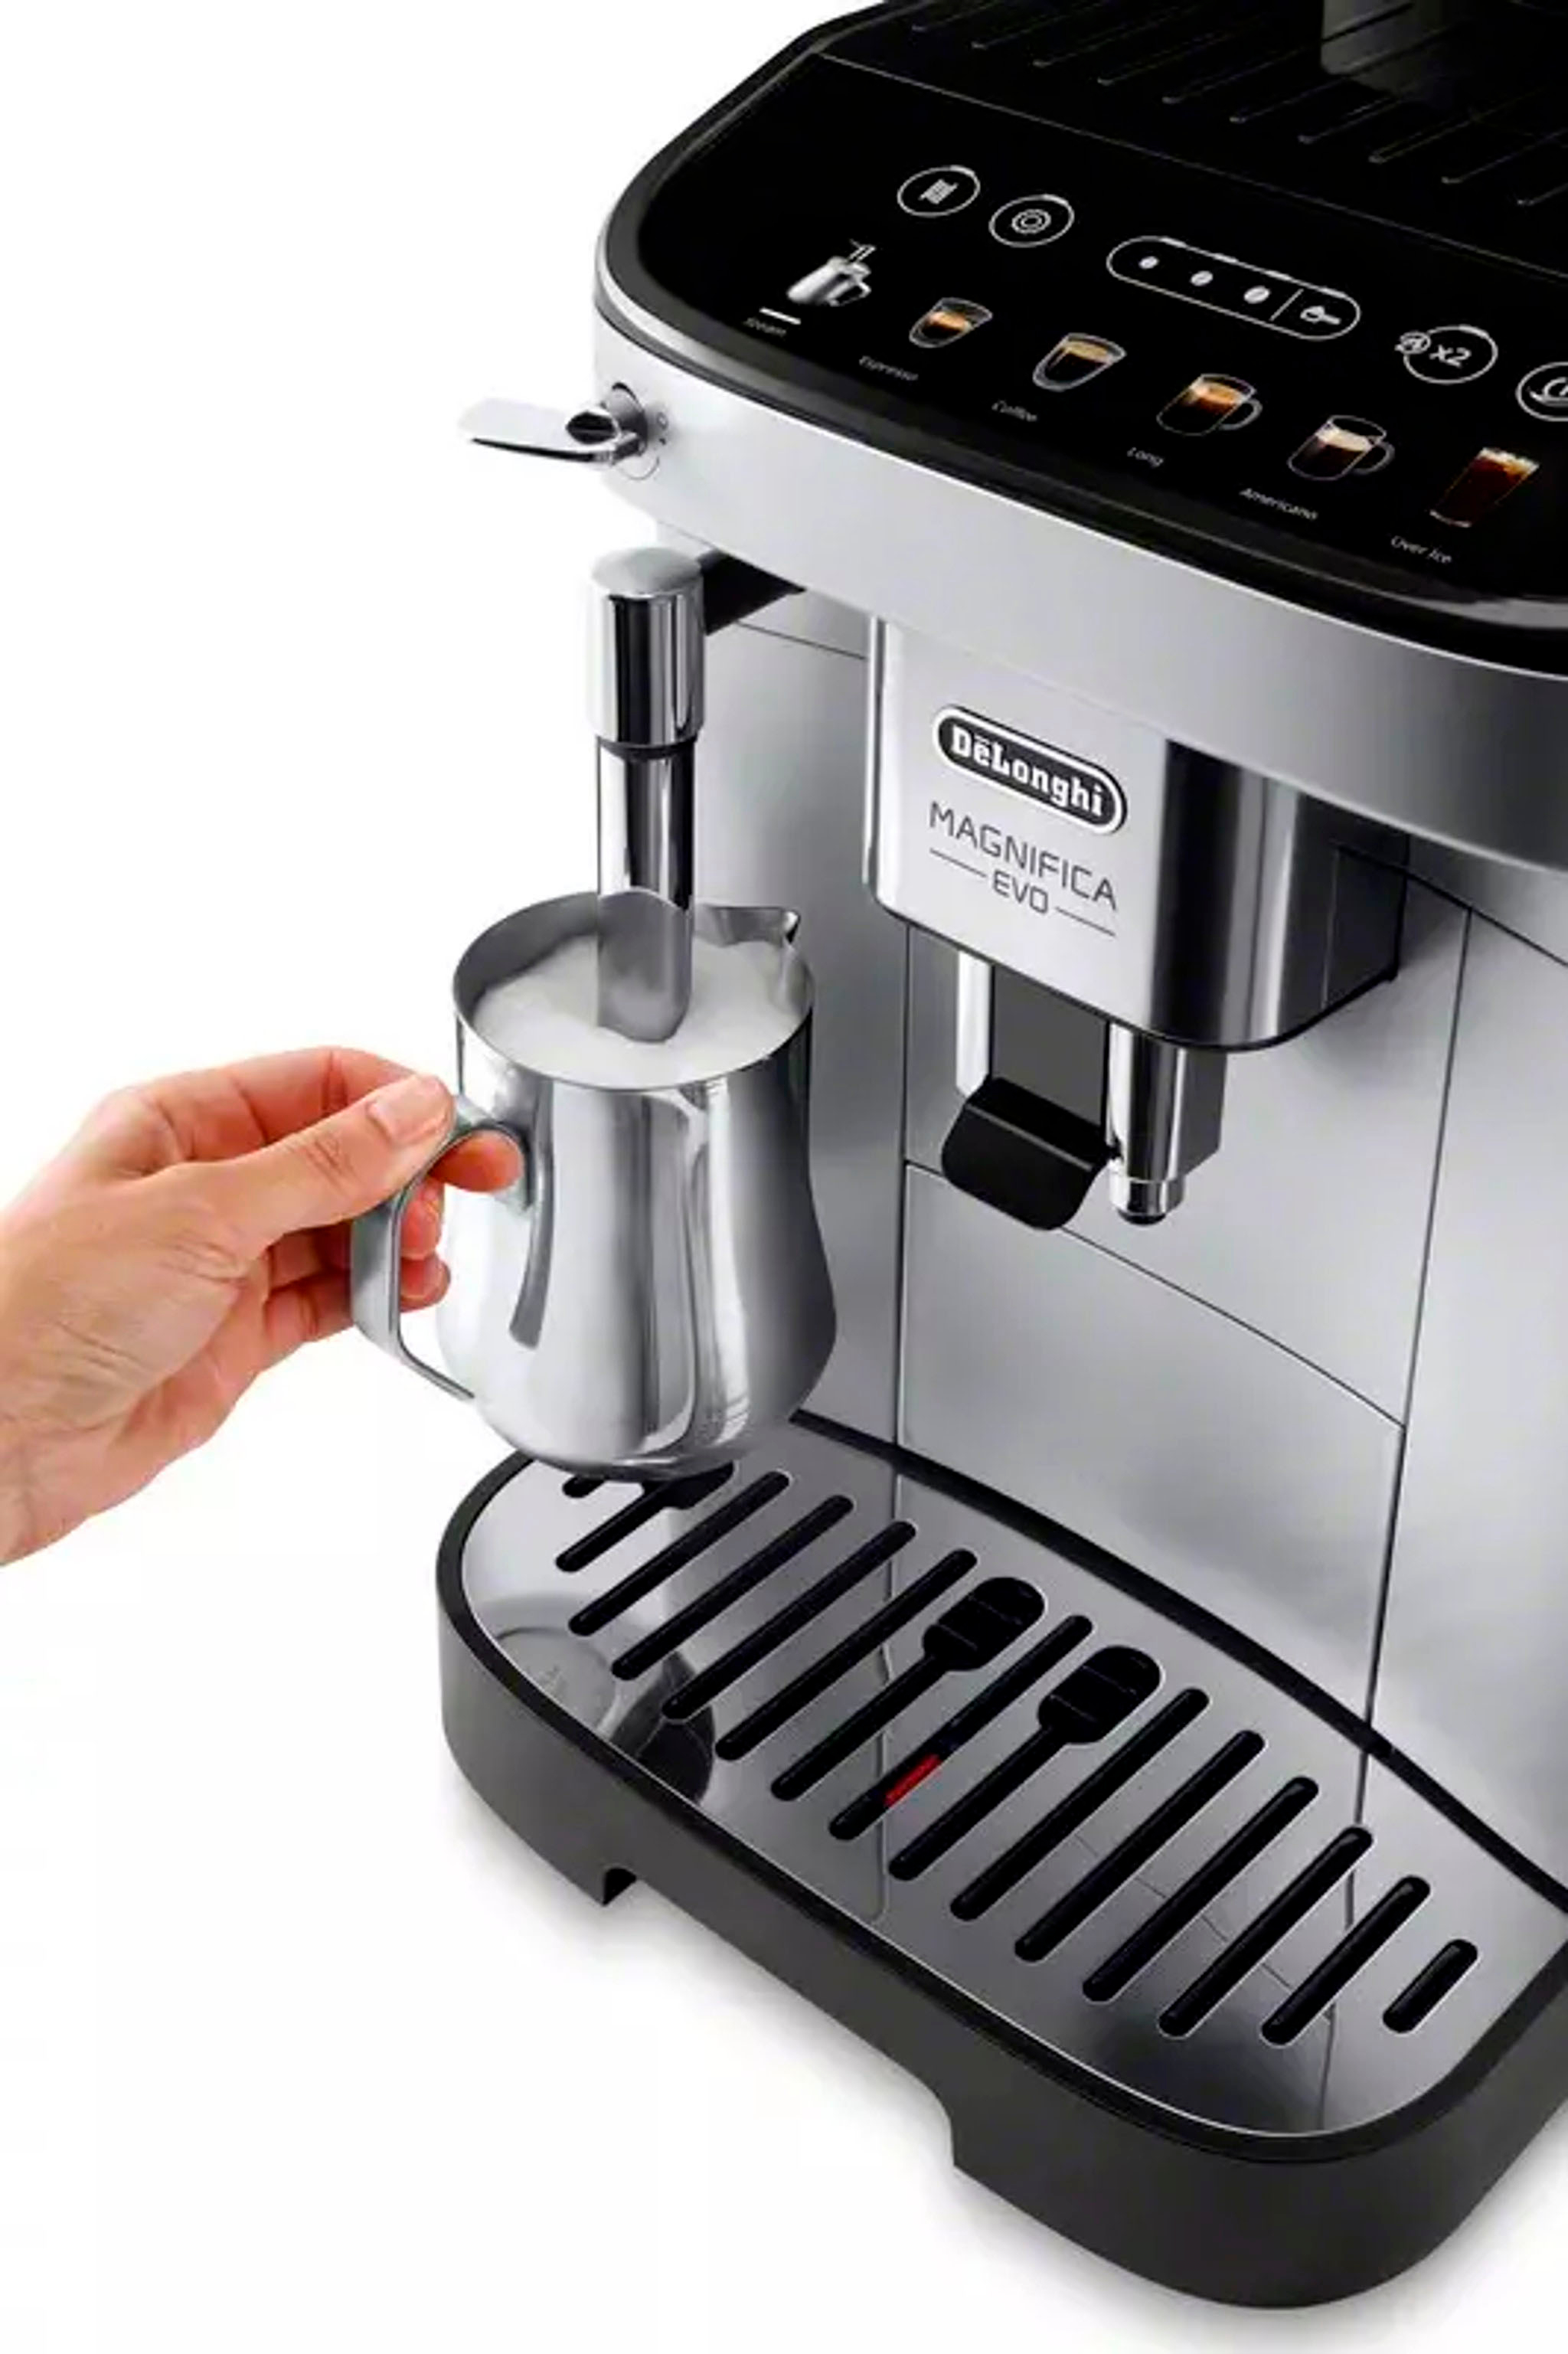 De'Longhi Magnifica Evo Coffee and Espresso Machine Silver ECAM29043SB -  Best Buy